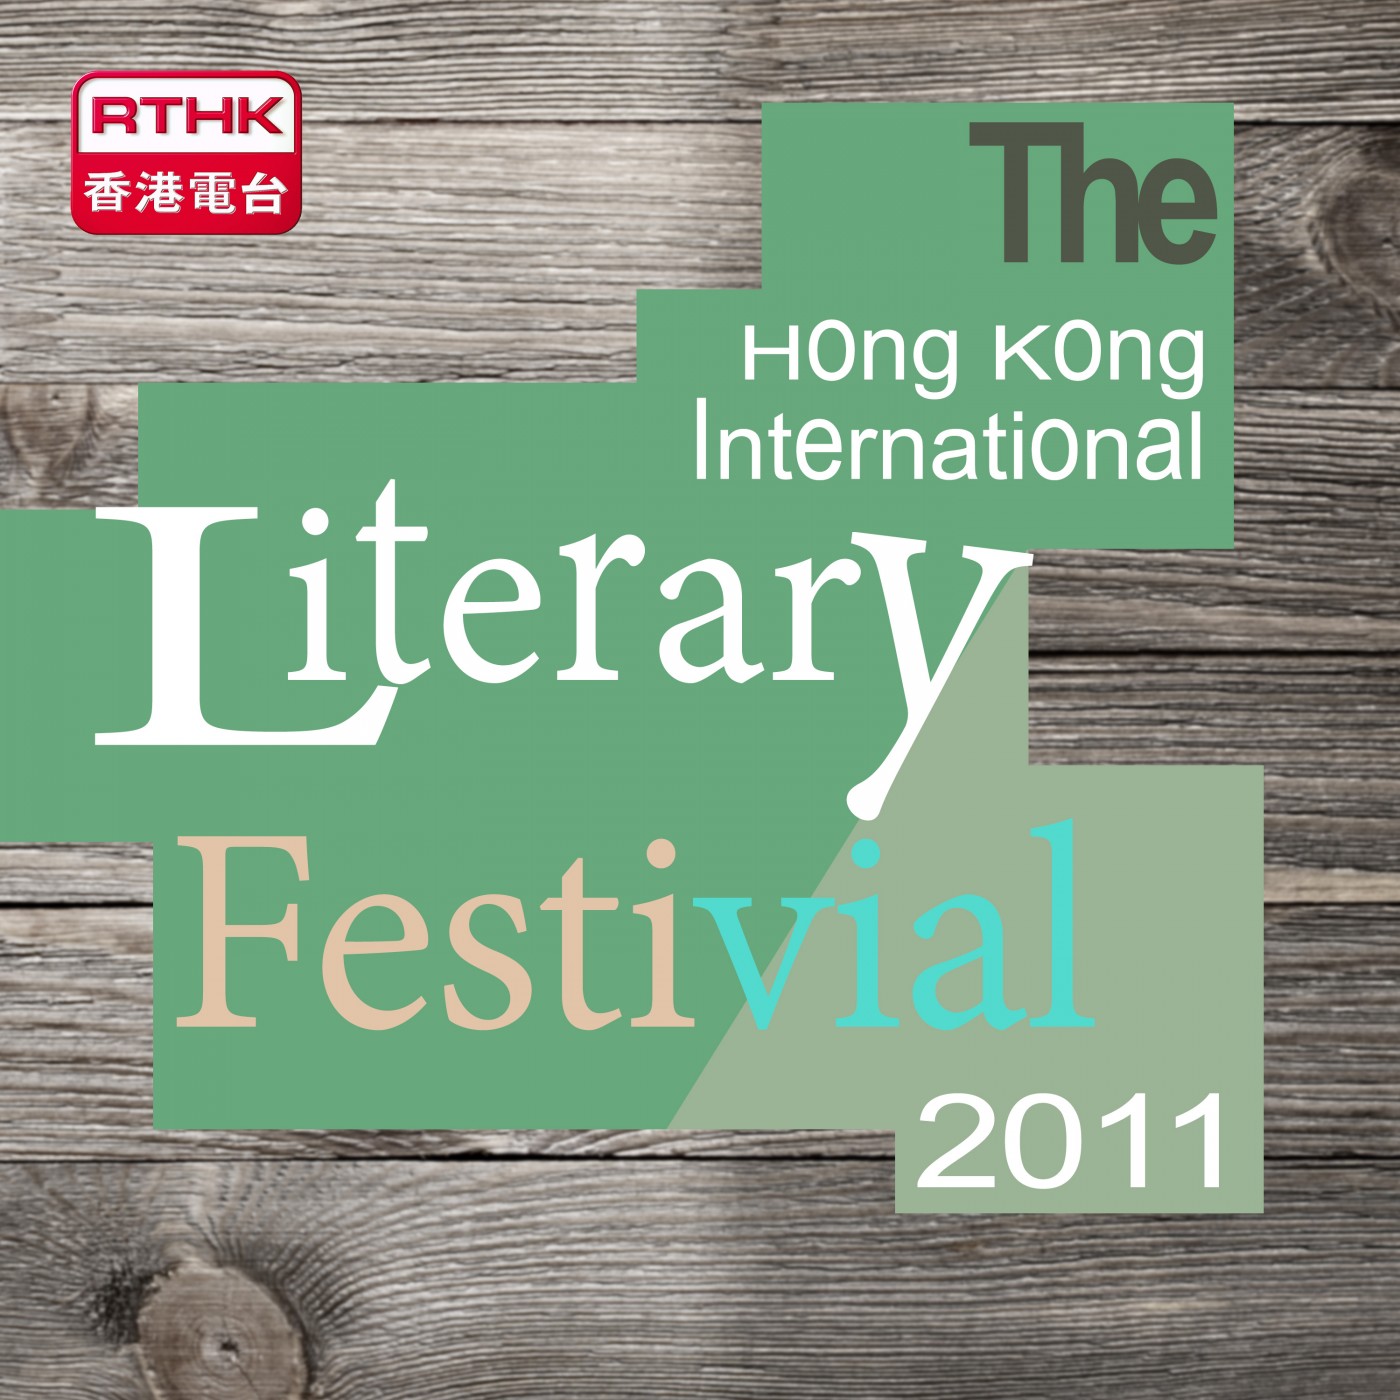 RTHK：The Hong Kong International Literary Festival 2011